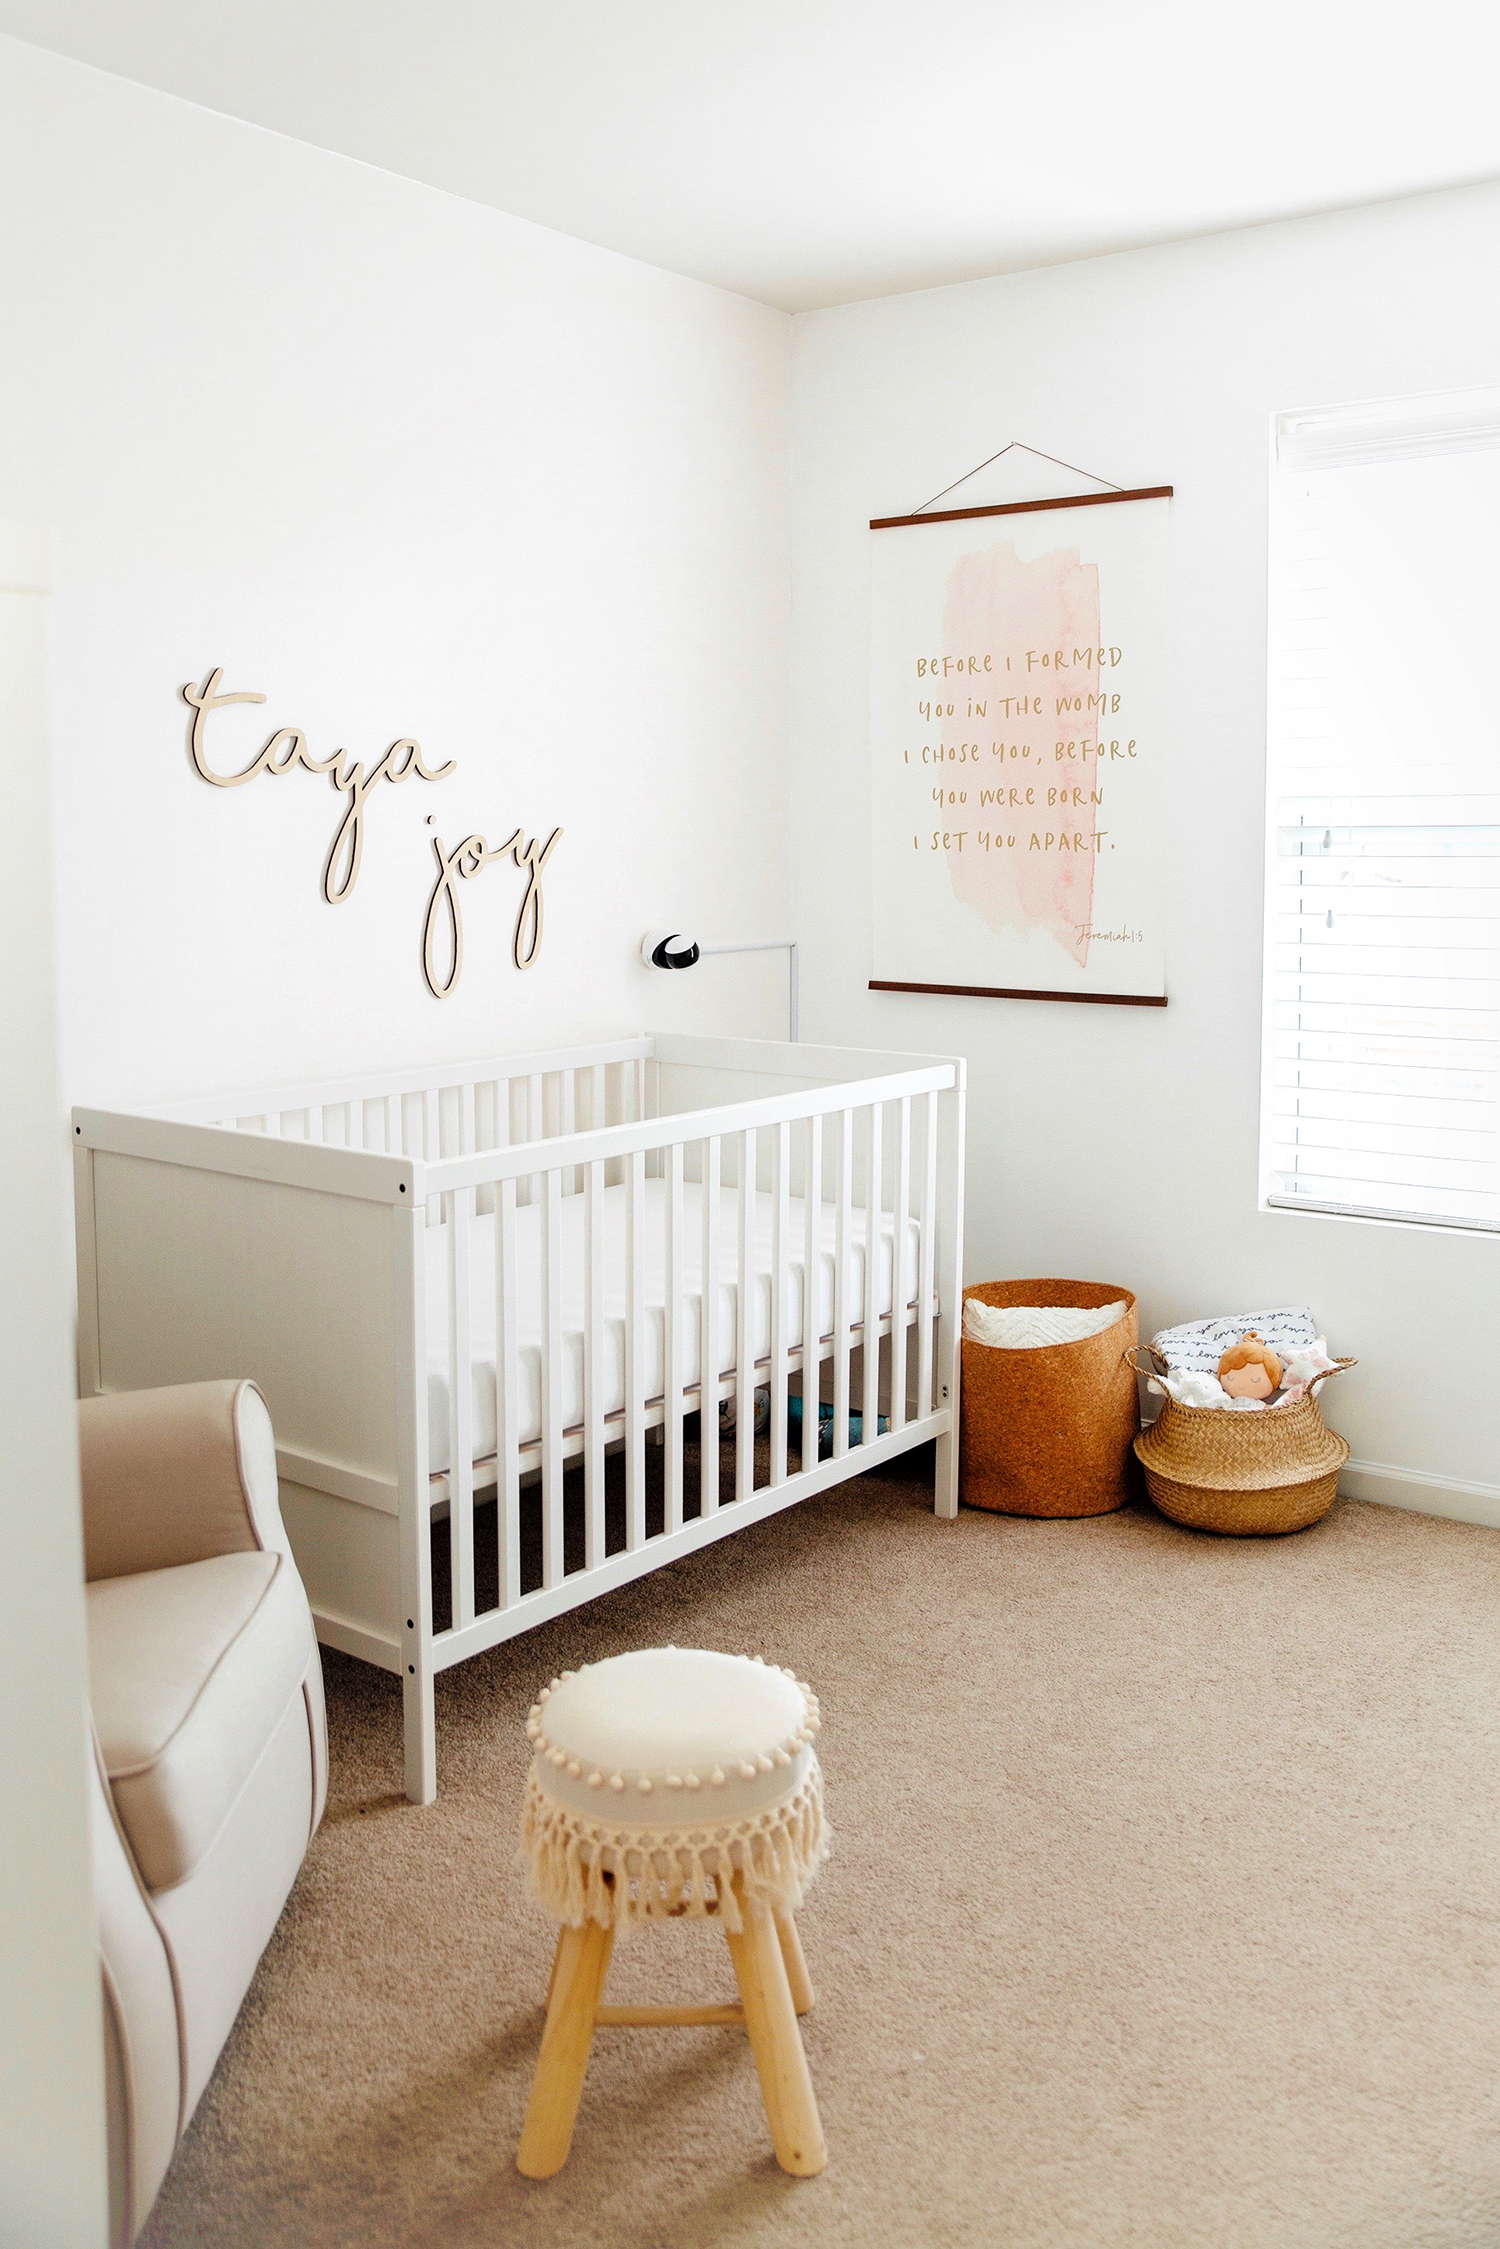 Baby Girl Nursery Room Ideas